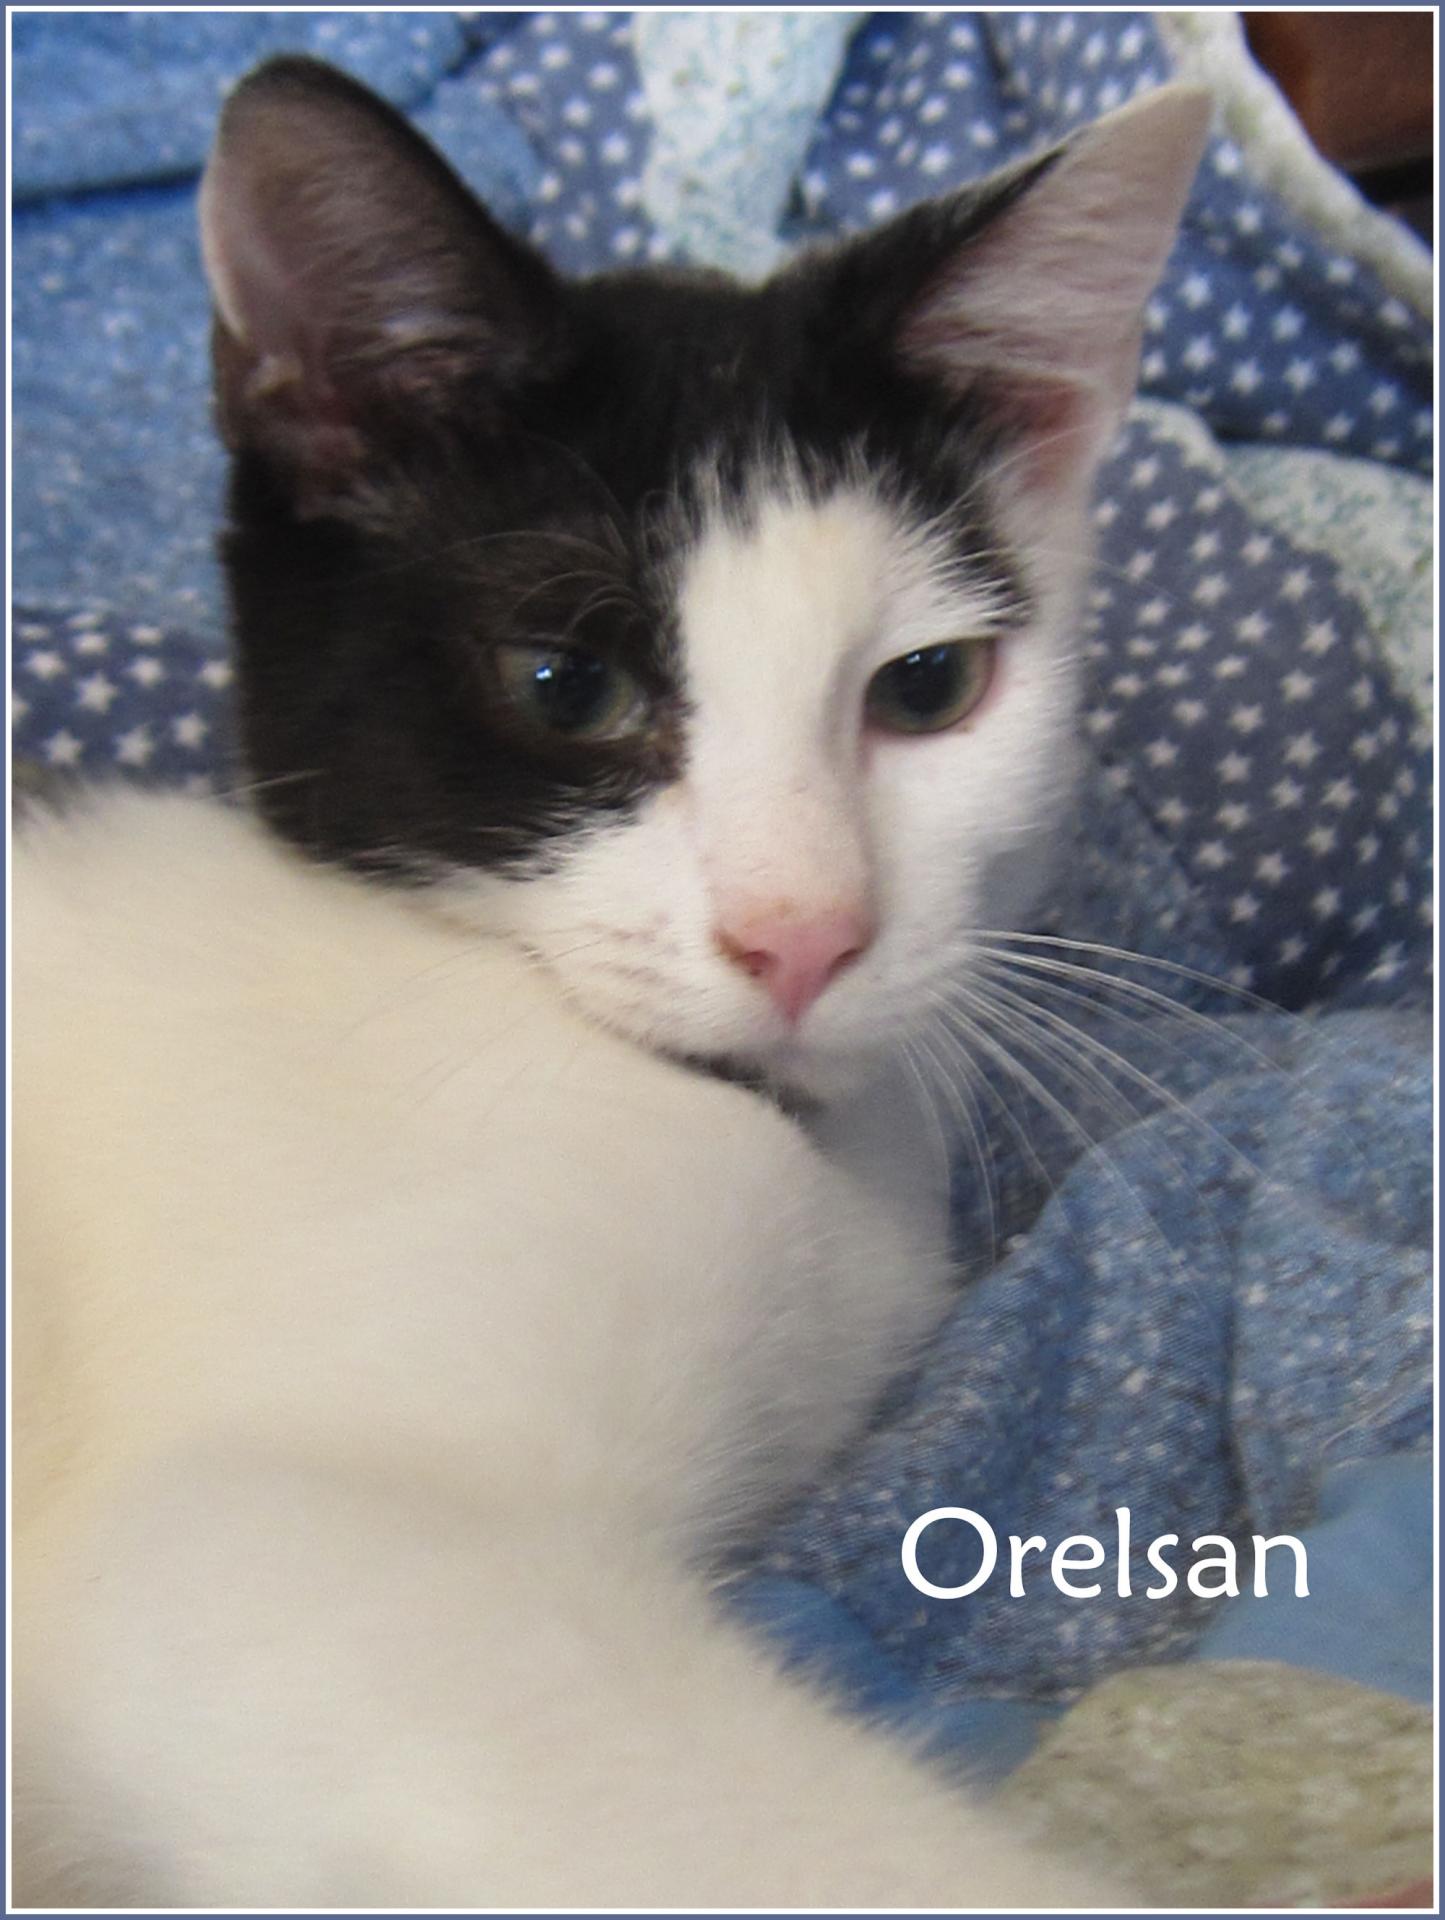 Orelsan - M - Né le 1/5/2018 - Adopté en octobre 2018